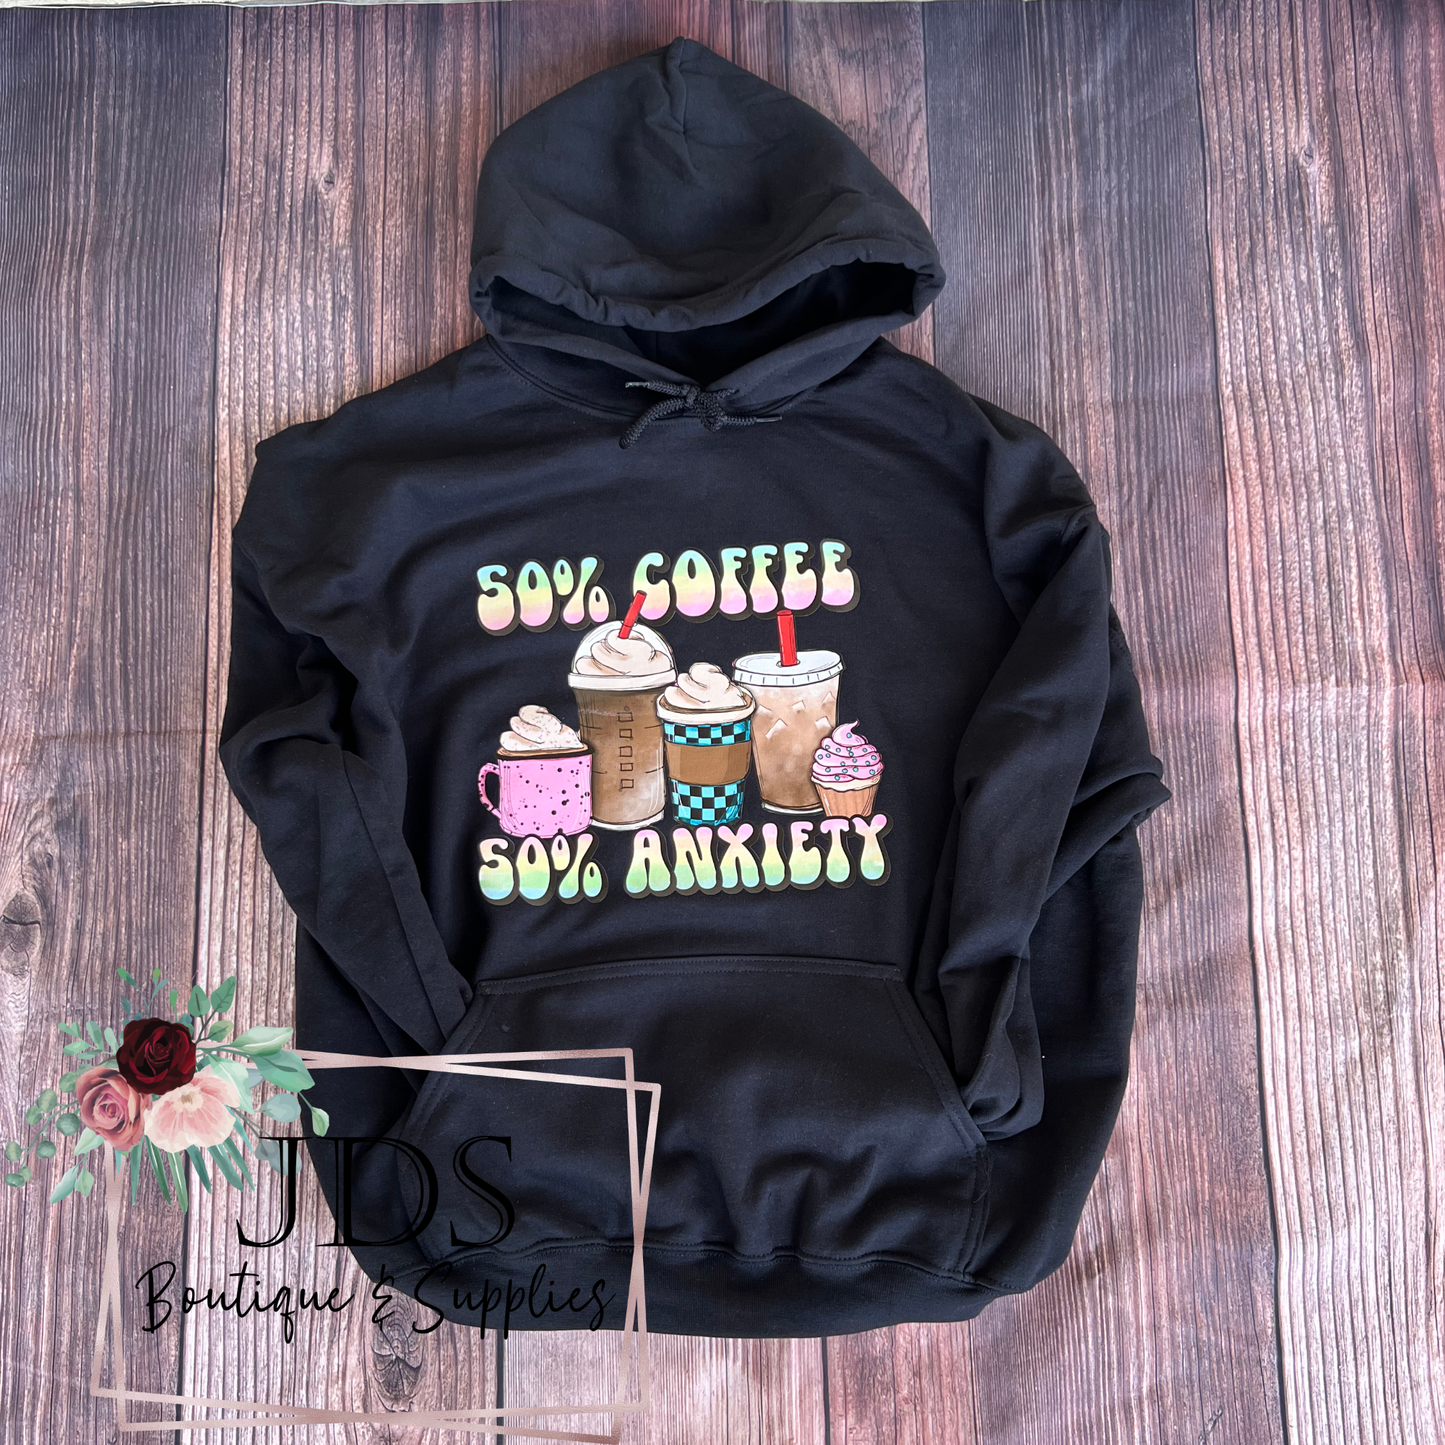 CS 50% Coffee 50% Anxiety Hoodie - Tshirt